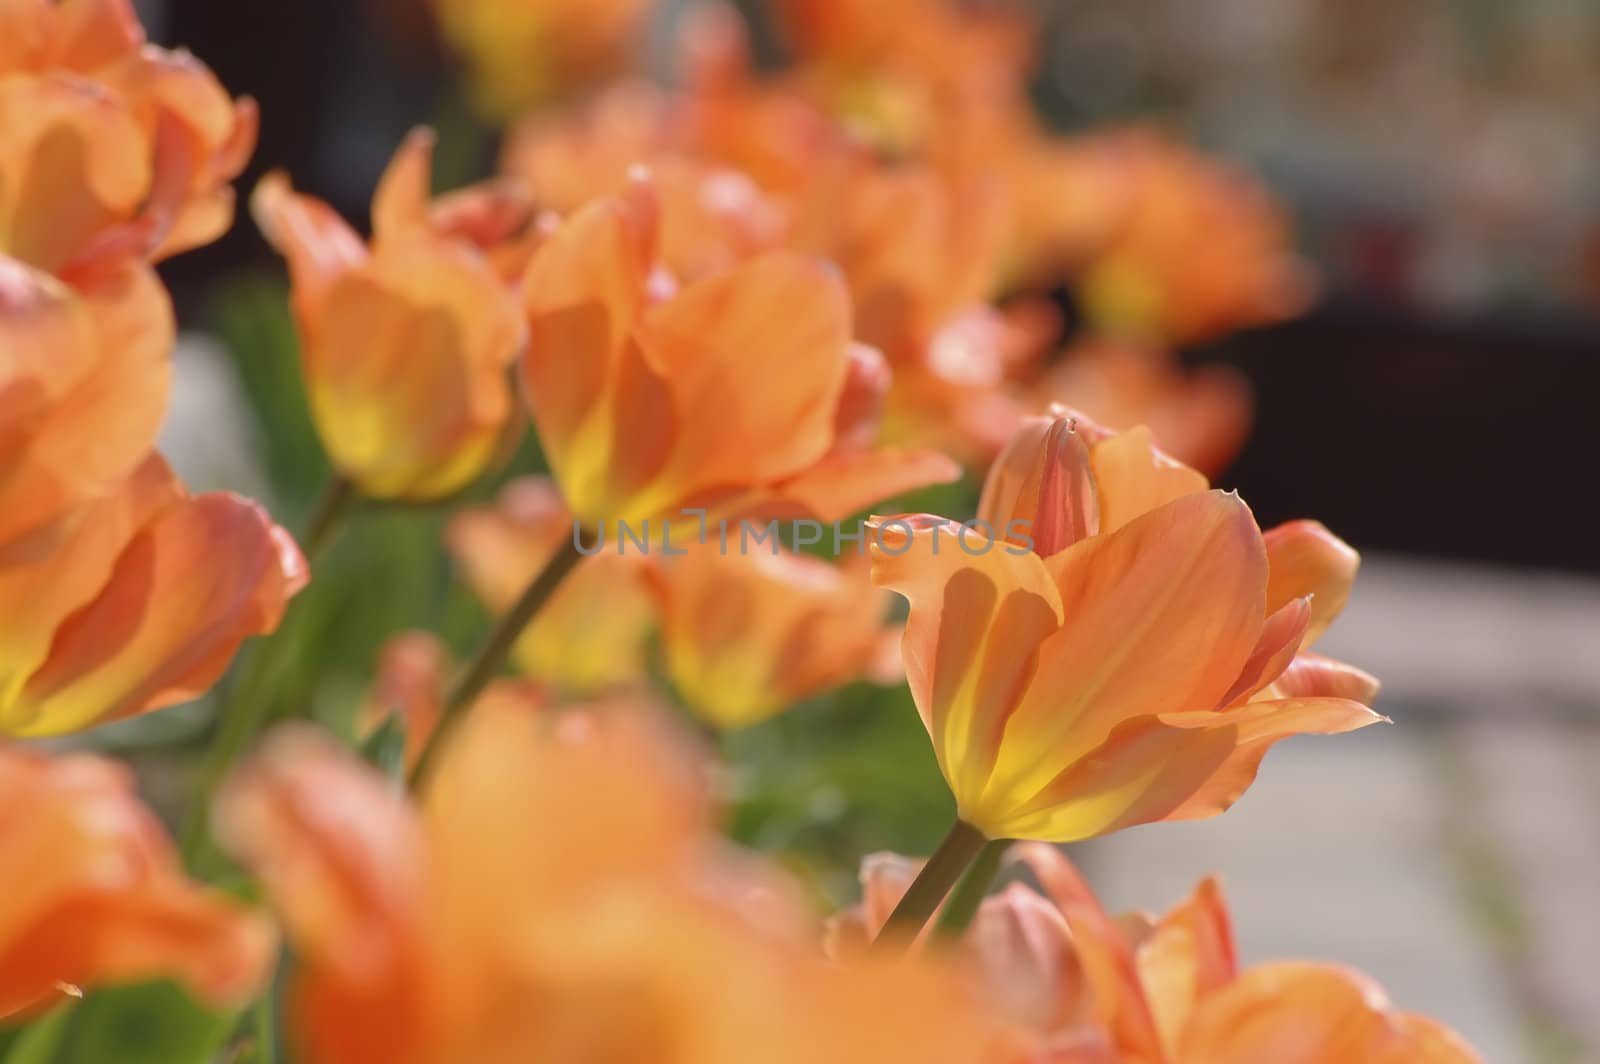 garden full of orange tulips, in the spring